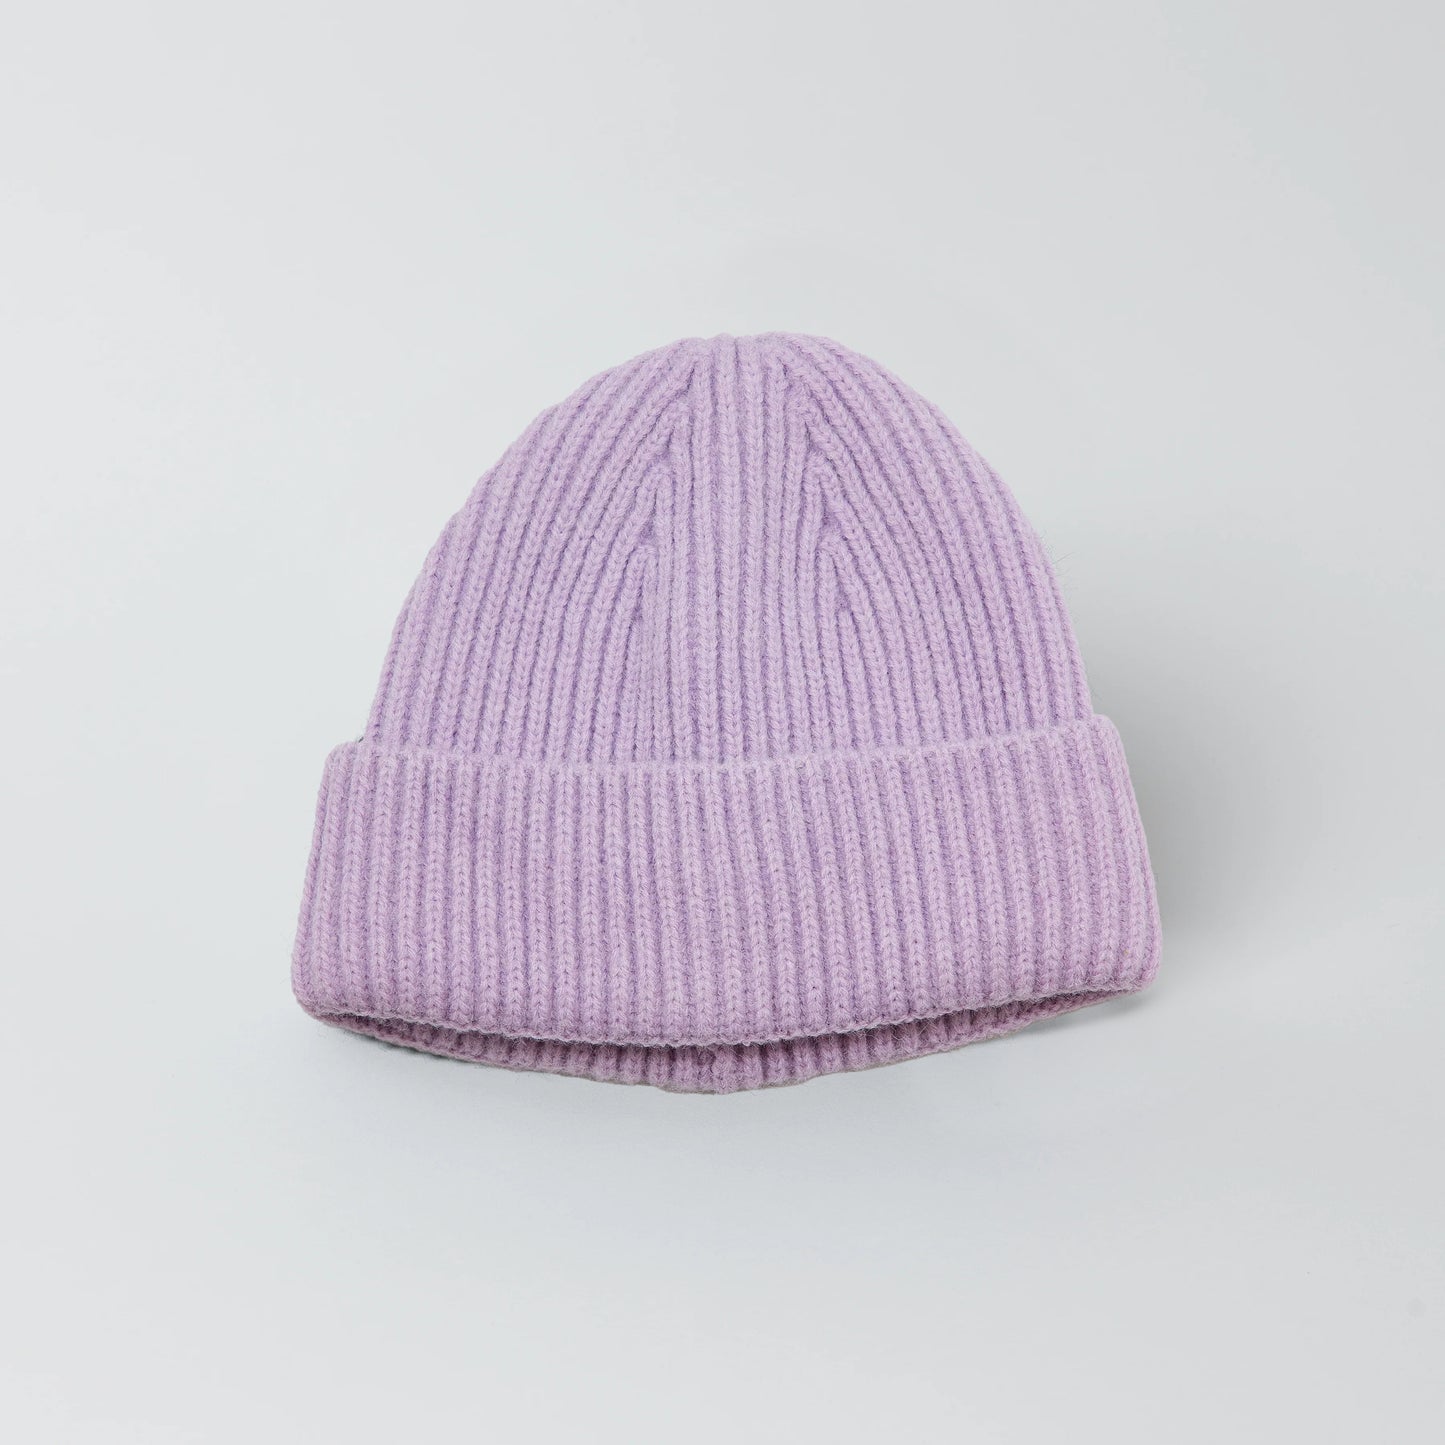 Match Rib Beanie Hat (Select Color) Lavender